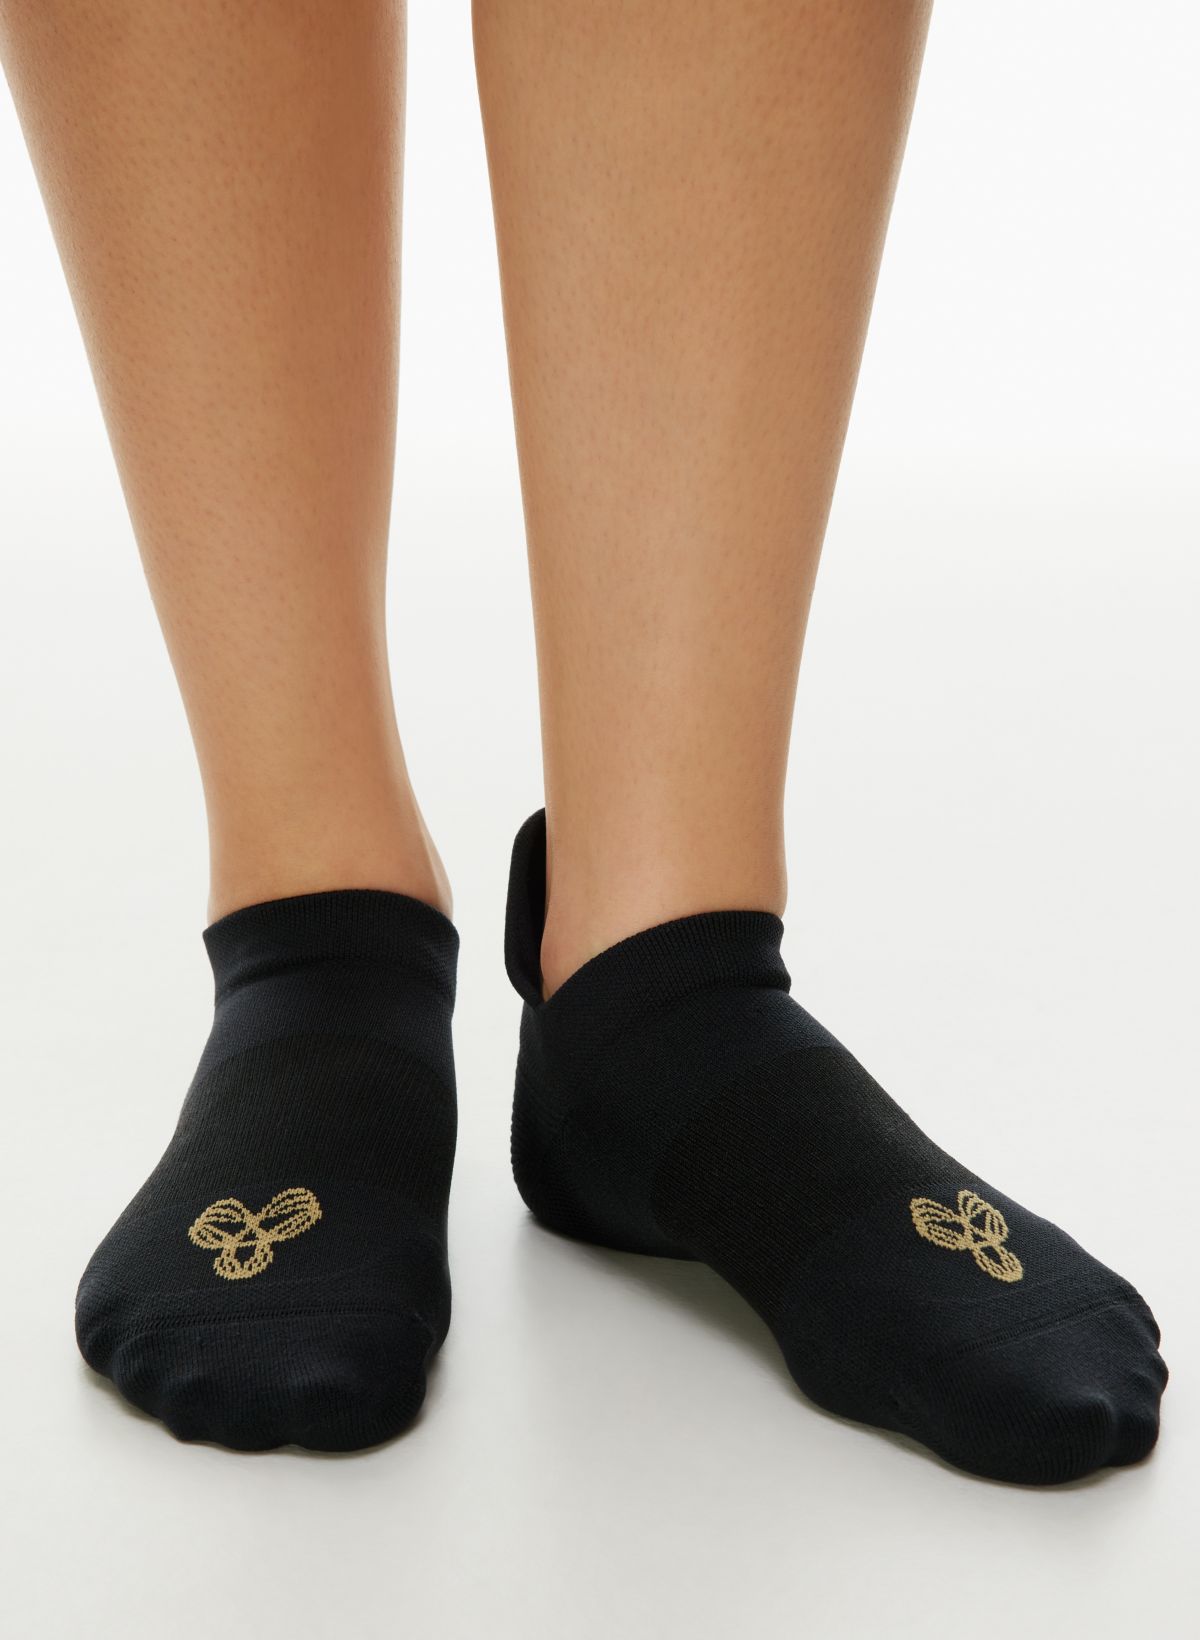 Kate Spade New York Black Barre Socks Set of 2 Yoga Non-Slip Soles One Size